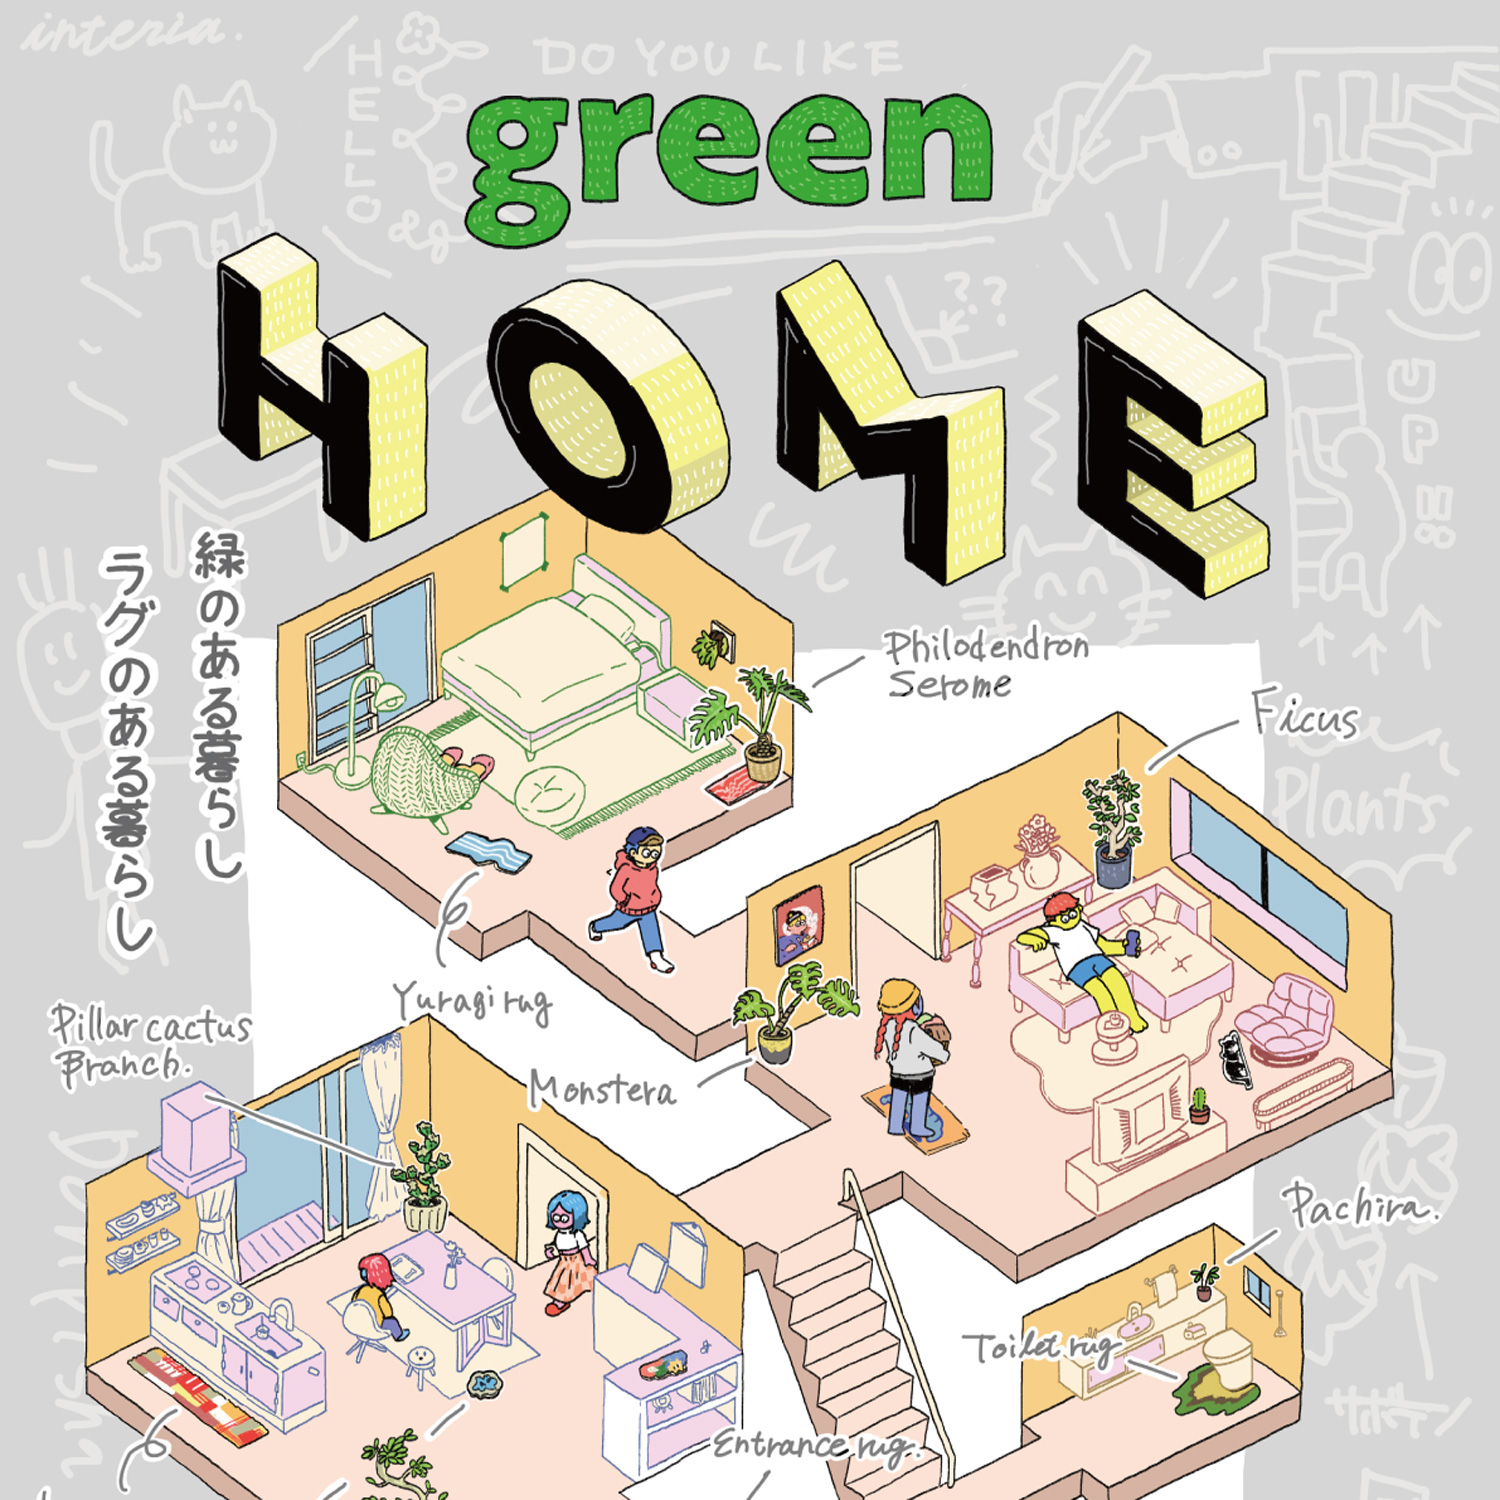 【EIGHT DESIGN × TAIYO FLOWER】green HOME